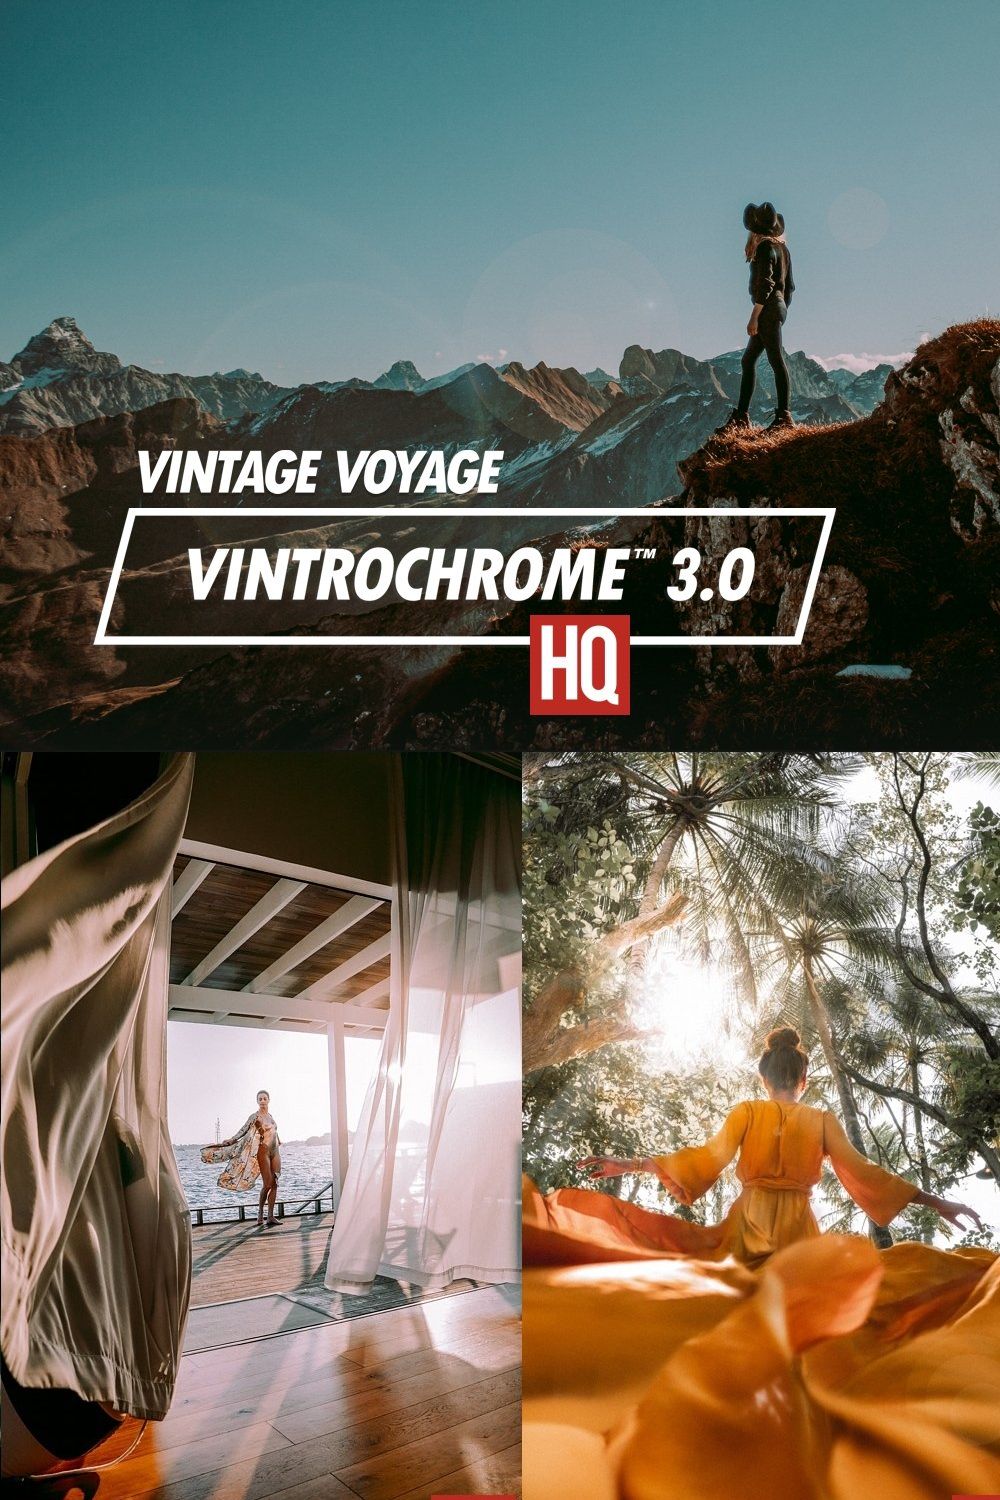 Vintrochrome 3.0 | Vintage Voyage pinterest preview image.